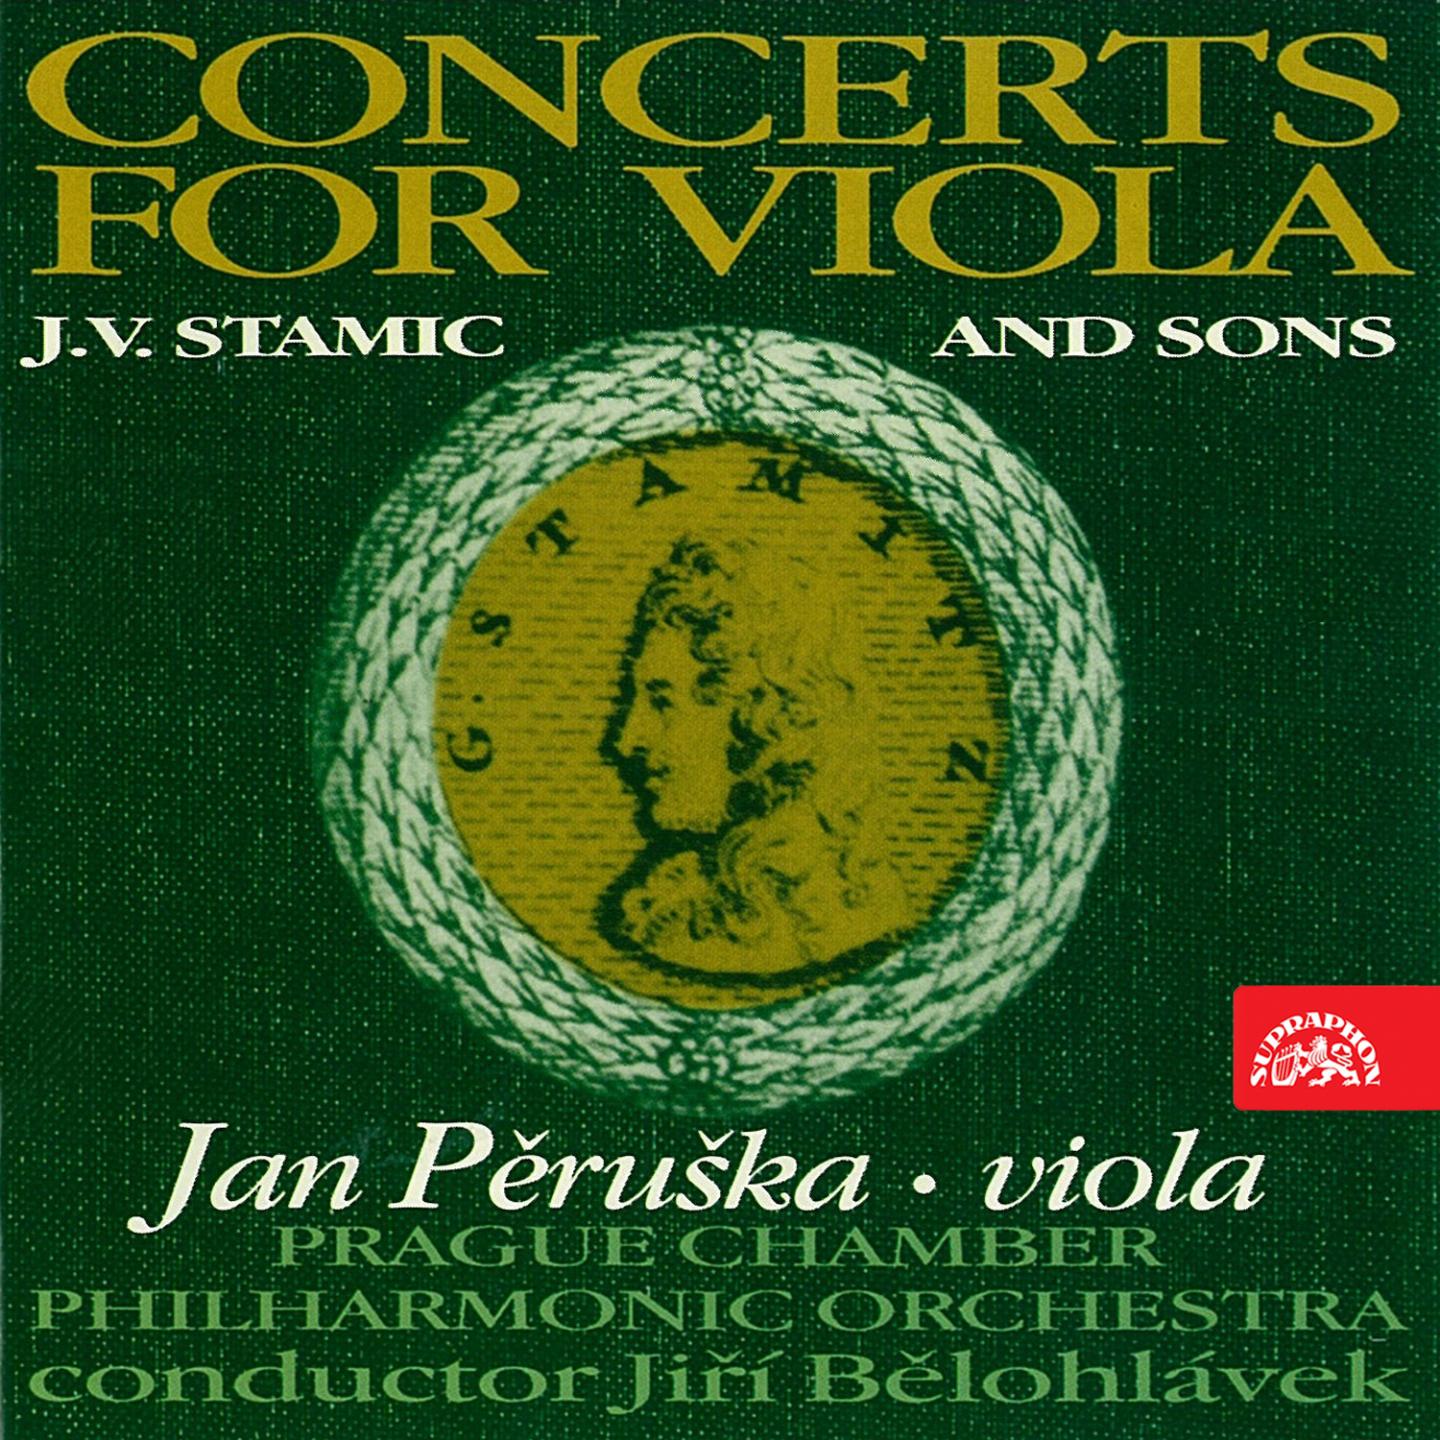 Concerto for Viola and Orchestra in G Major: II. Adagio